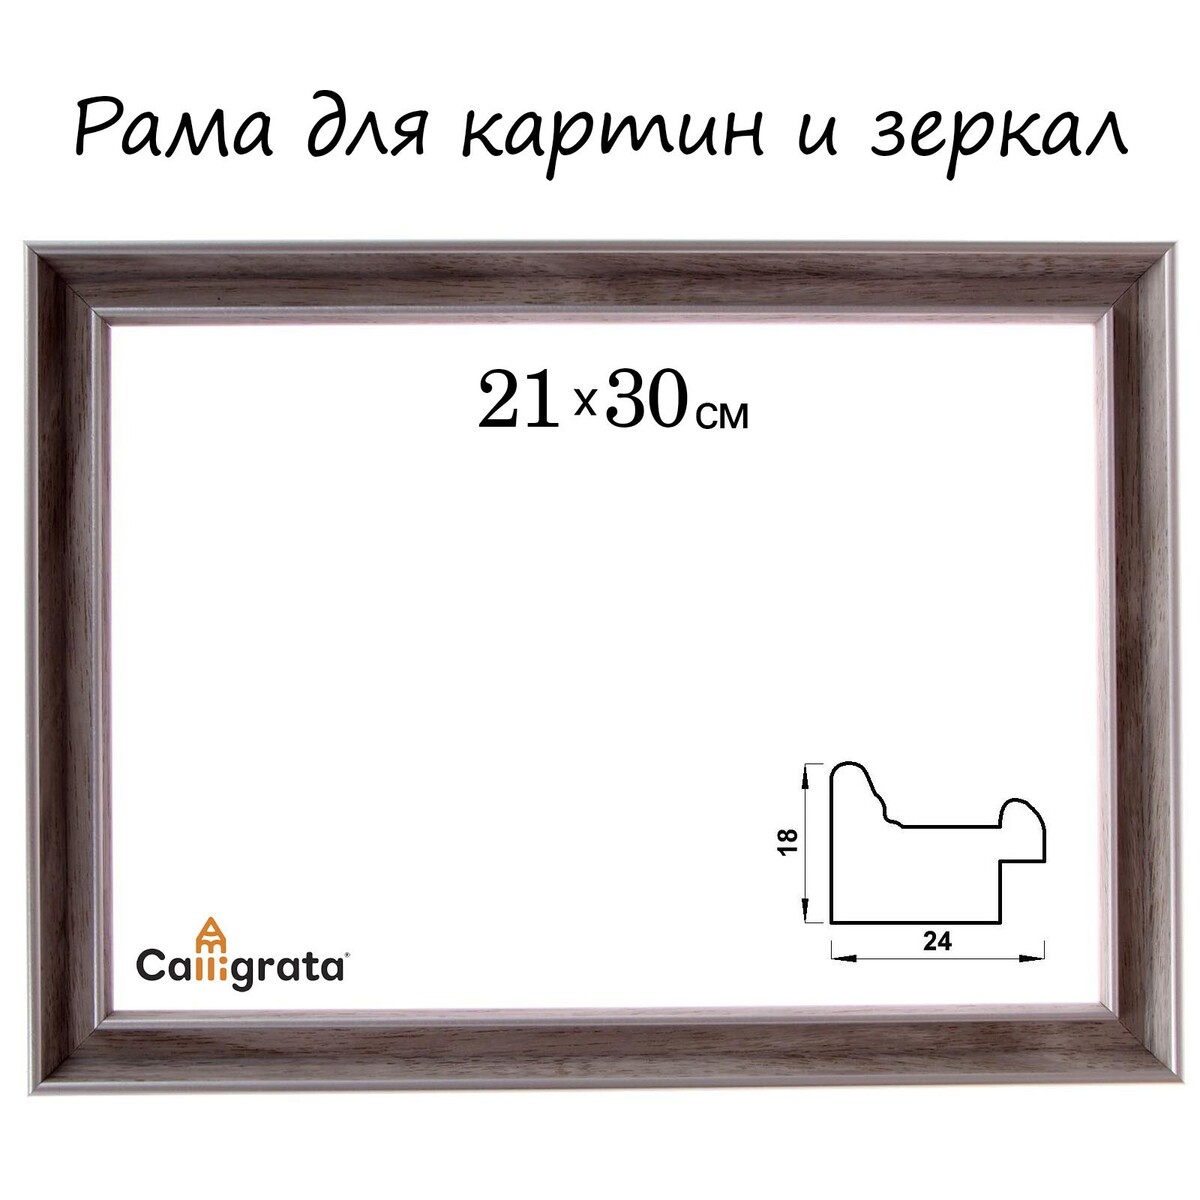 Рама для картин (зеркал) 21 х 30 х 2,4 см, пластиковая, calligrata 6424, бежевая подставка на подголовник mdc 106 пластиковая бежевая